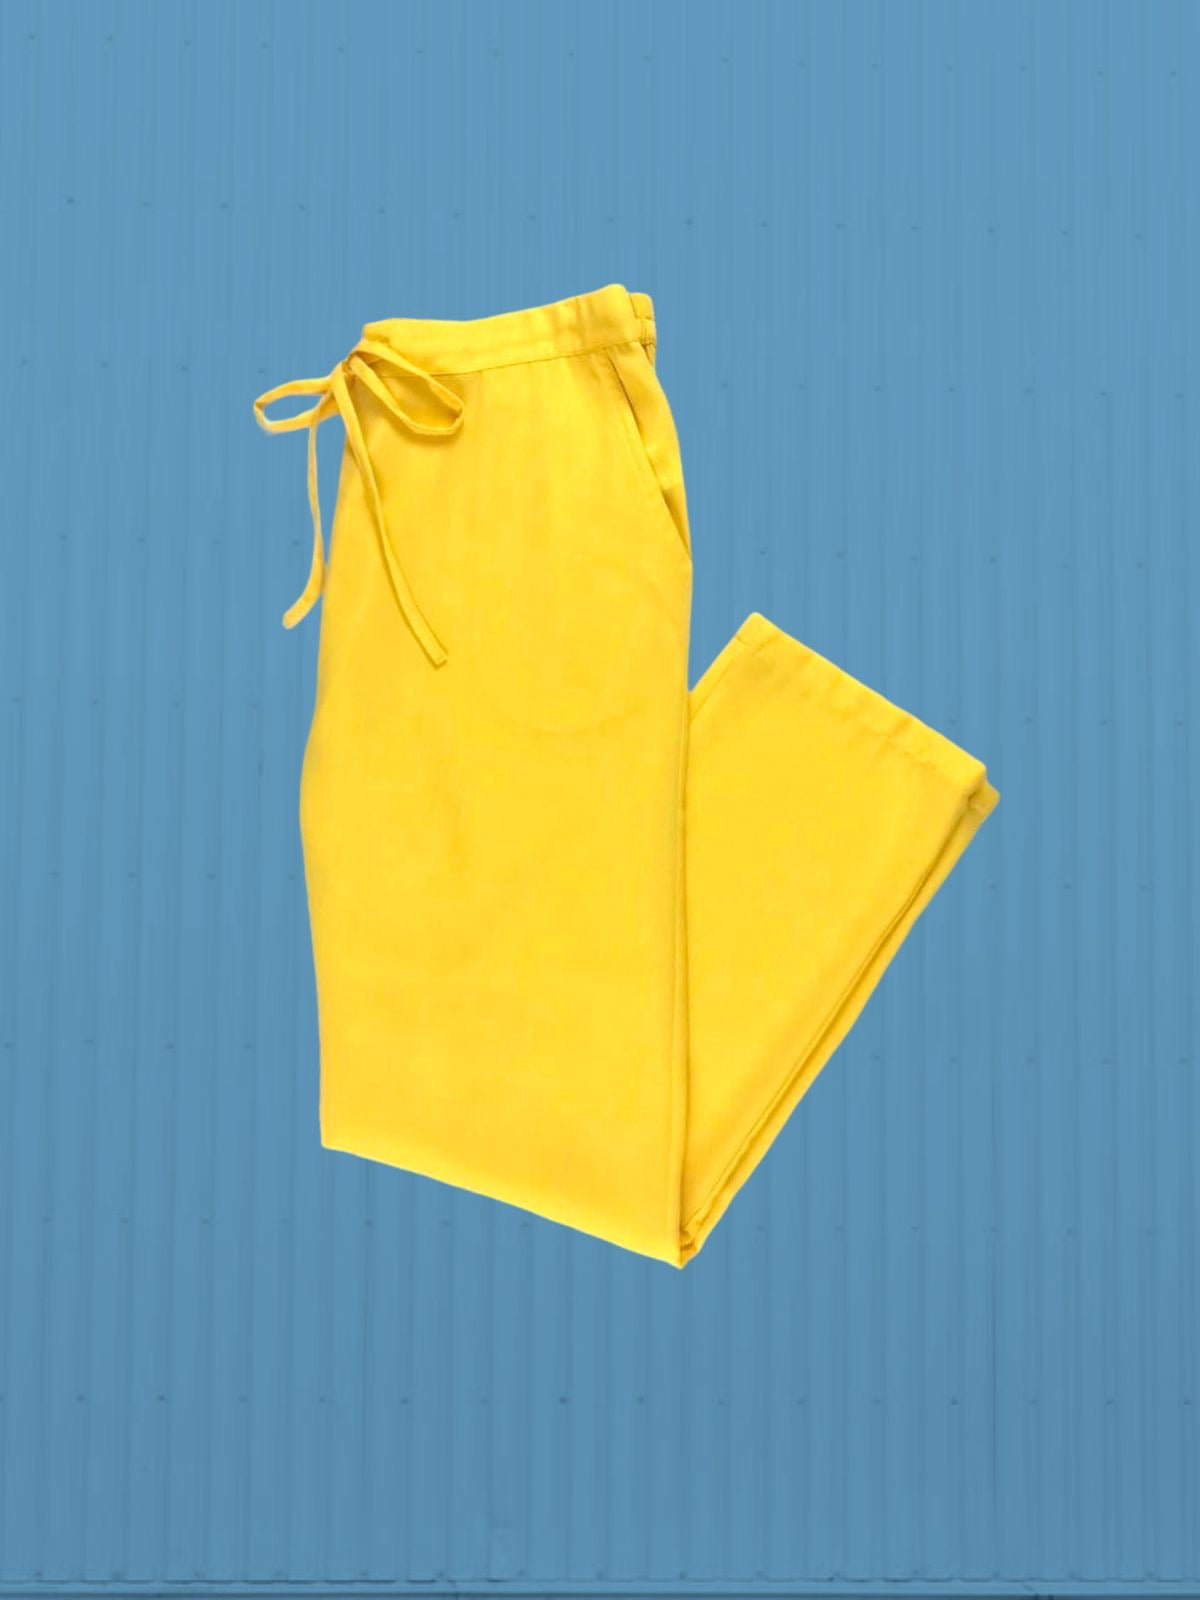 Md’M | Pantalón vestir pijama 5119 amarillo